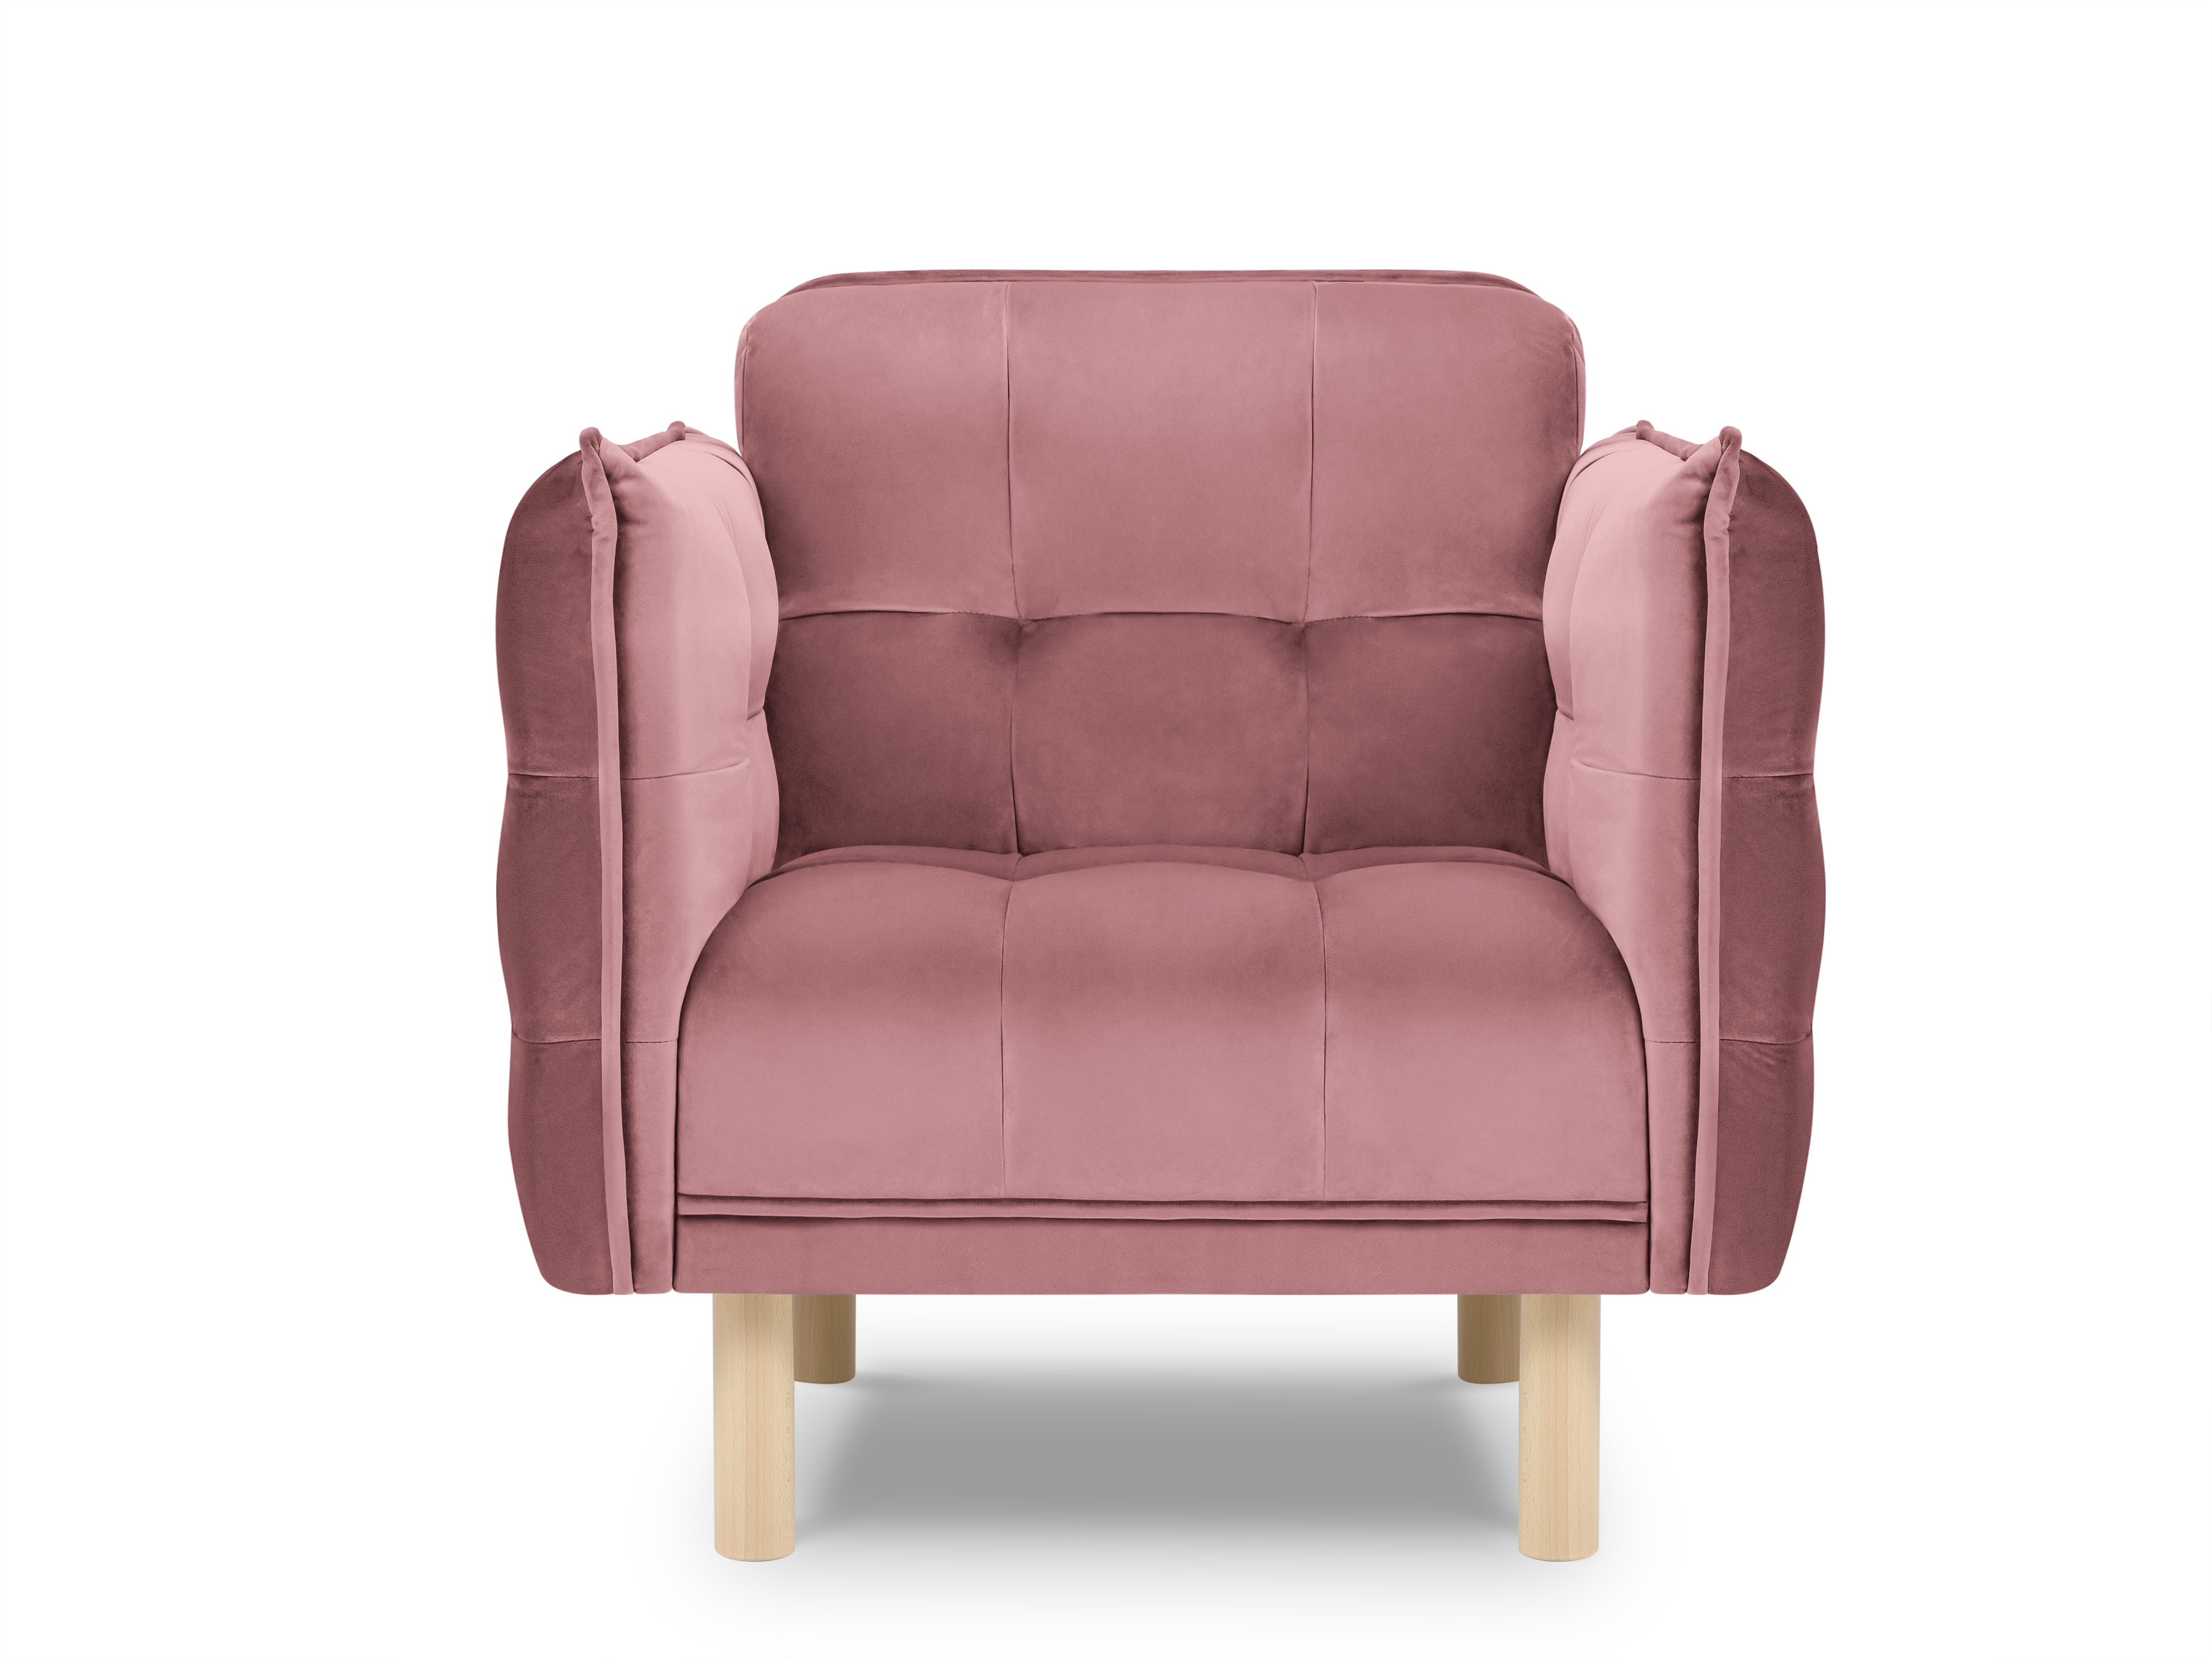 Mulli pink armchair